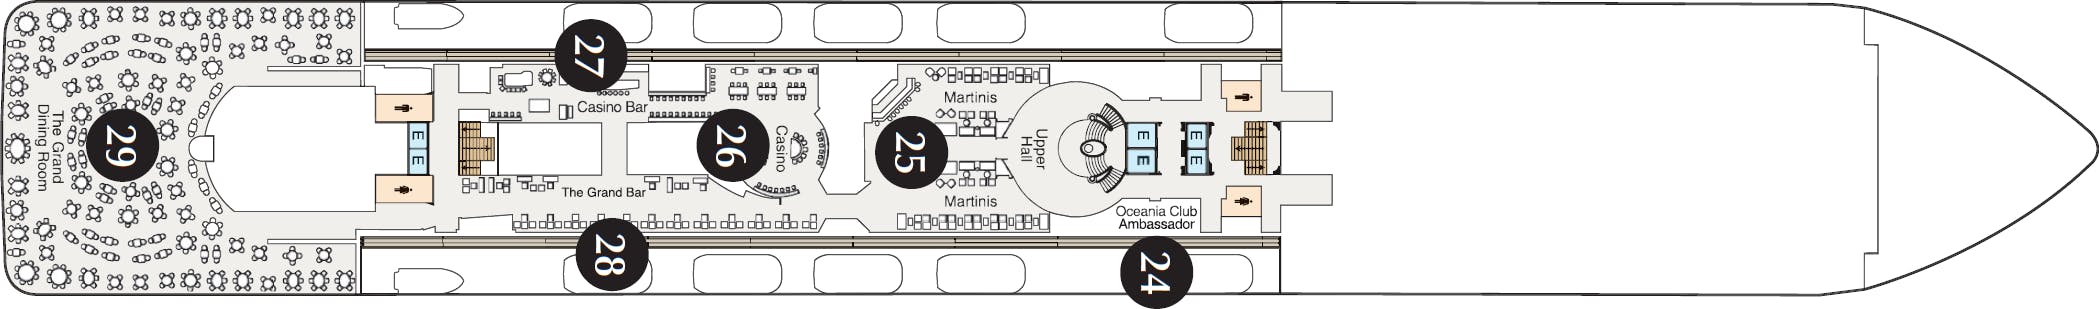 MS Riviera - Oceania Cruises - Deck 6 (Deck 6)